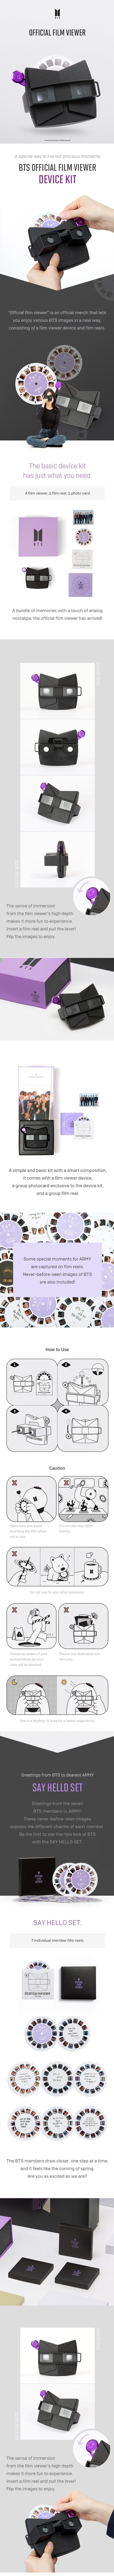 Kit oficial de dispositivos de visores de películas de BTS + Say Hello Reel Set